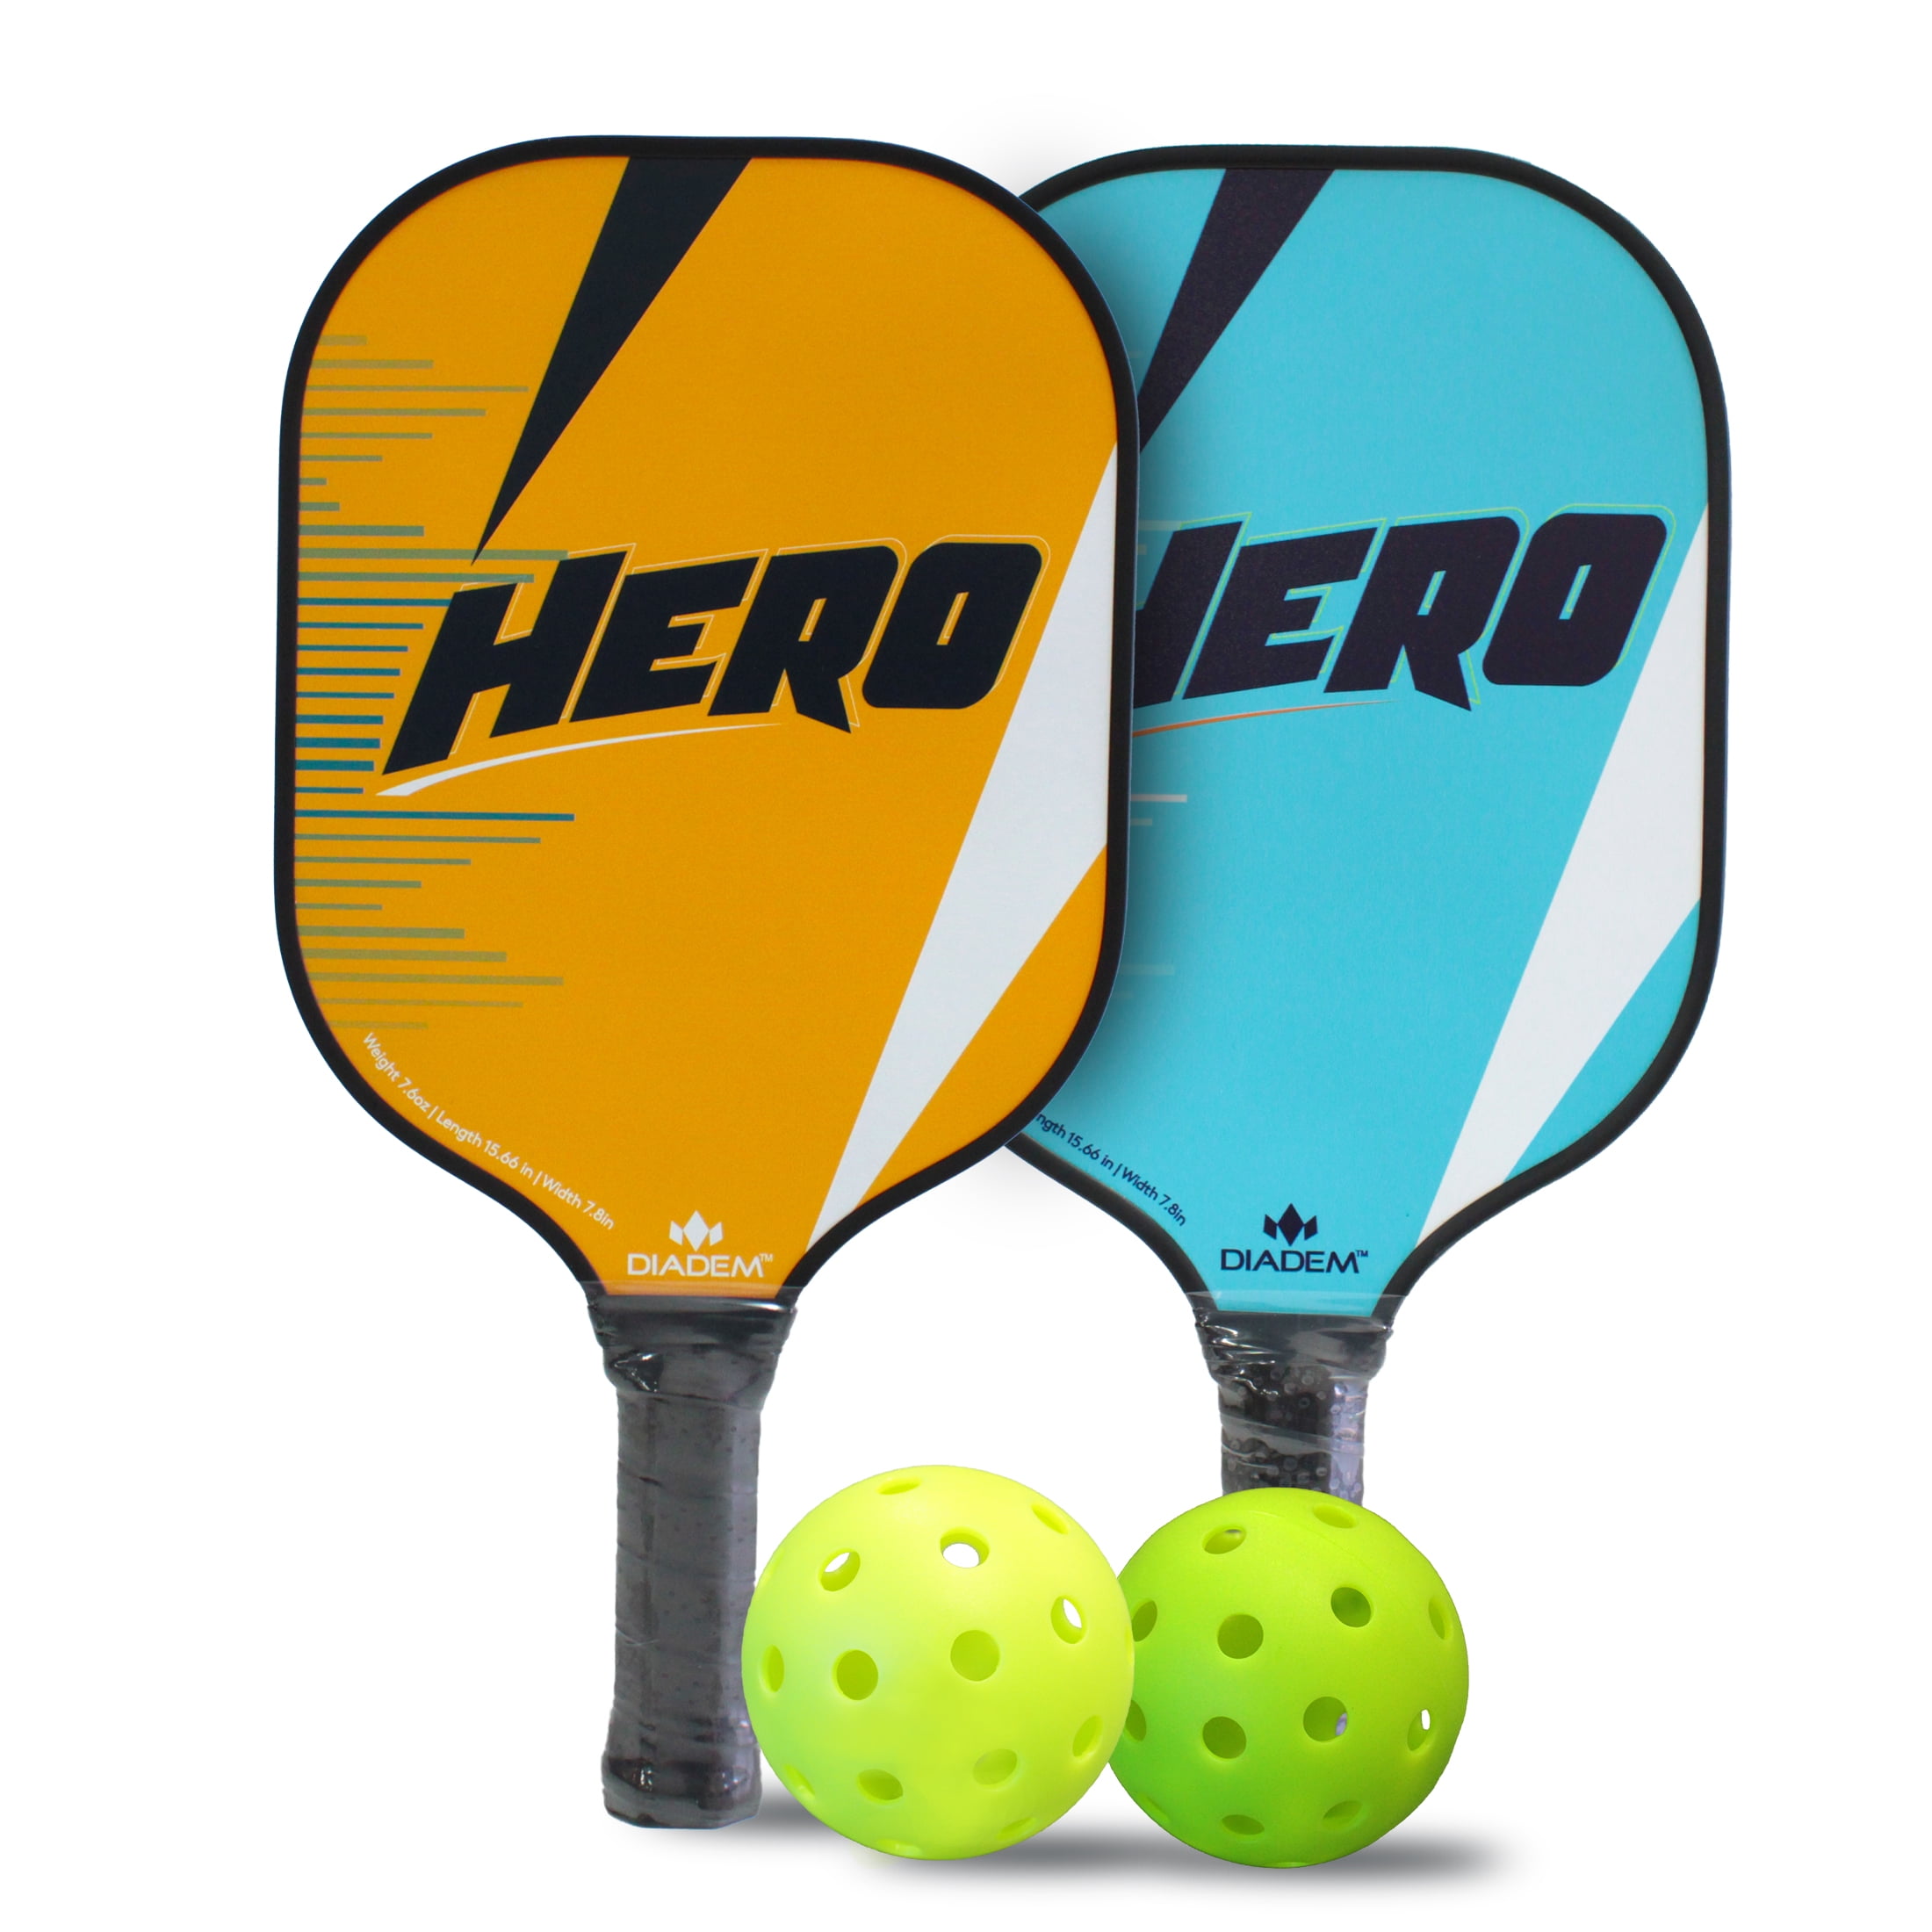 Diadem Sports Hero Pickleball Starter Set, includes 1 Blue Paddle + 1 Orange Paddle + 2 Balls + Bonus Mesh Carrying Bag,16oz